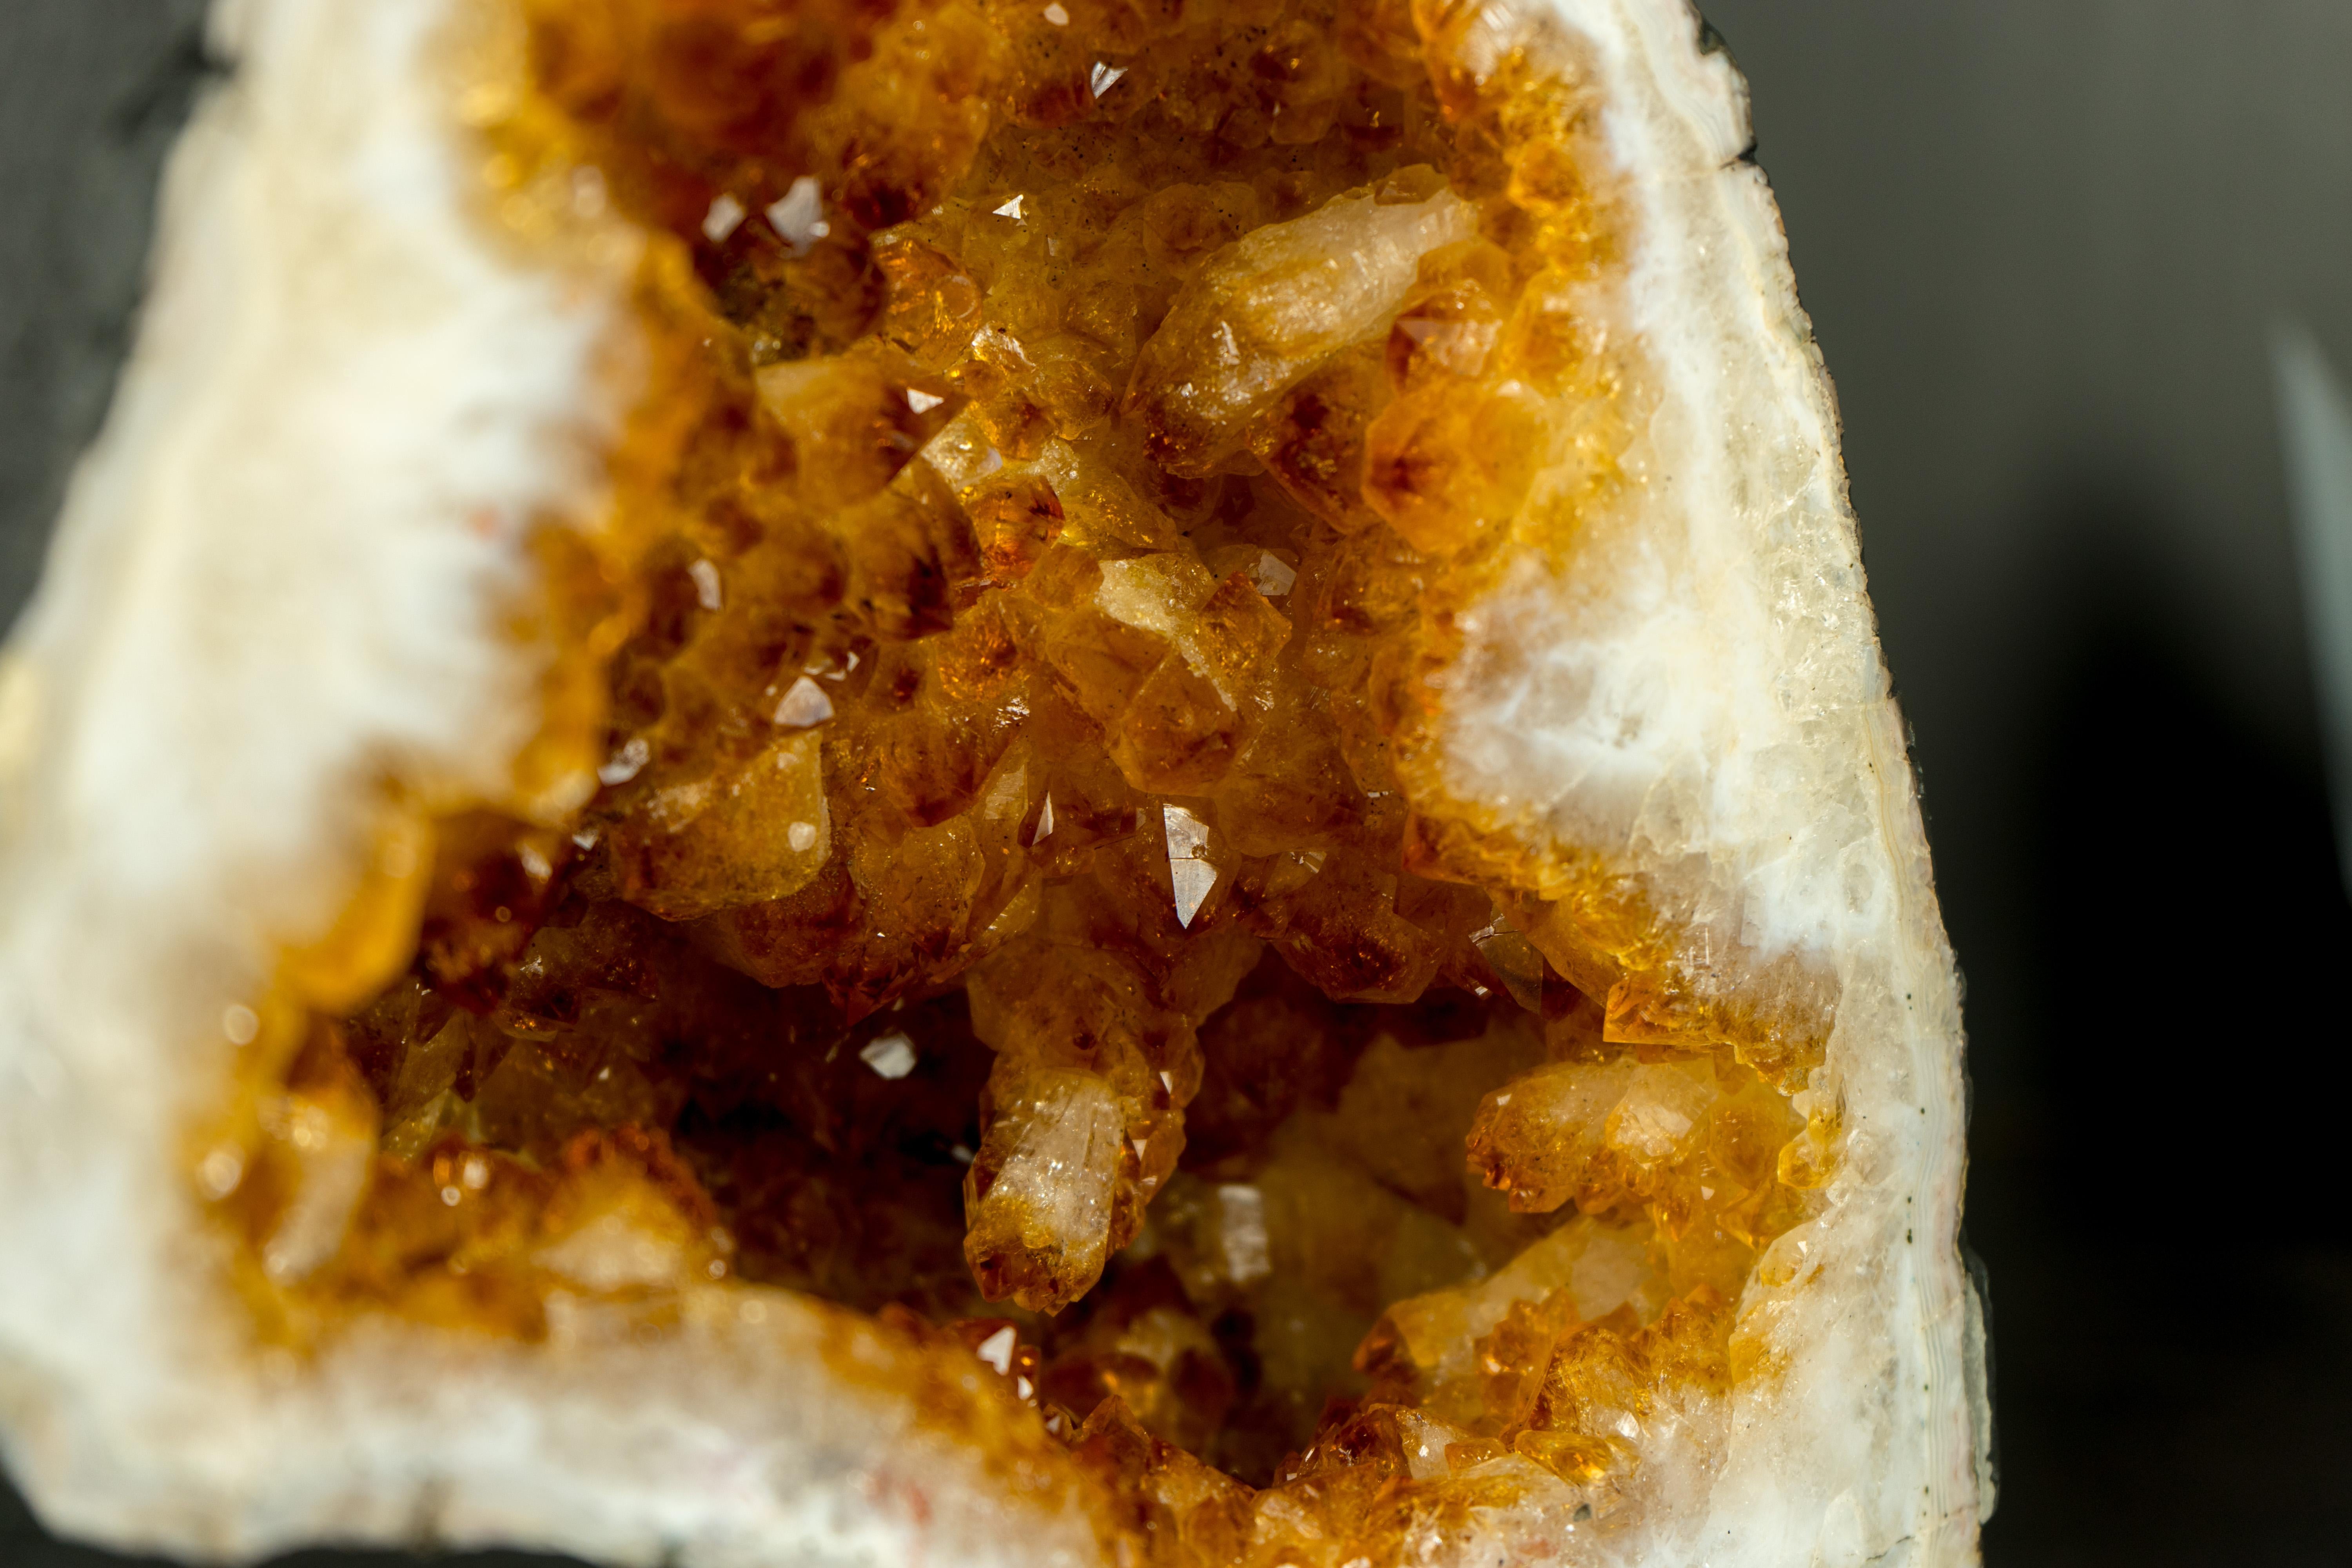 Amethyst High-Grade Natural Citrine Geode Cave with Deep Orange Citrine Druzy For Sale